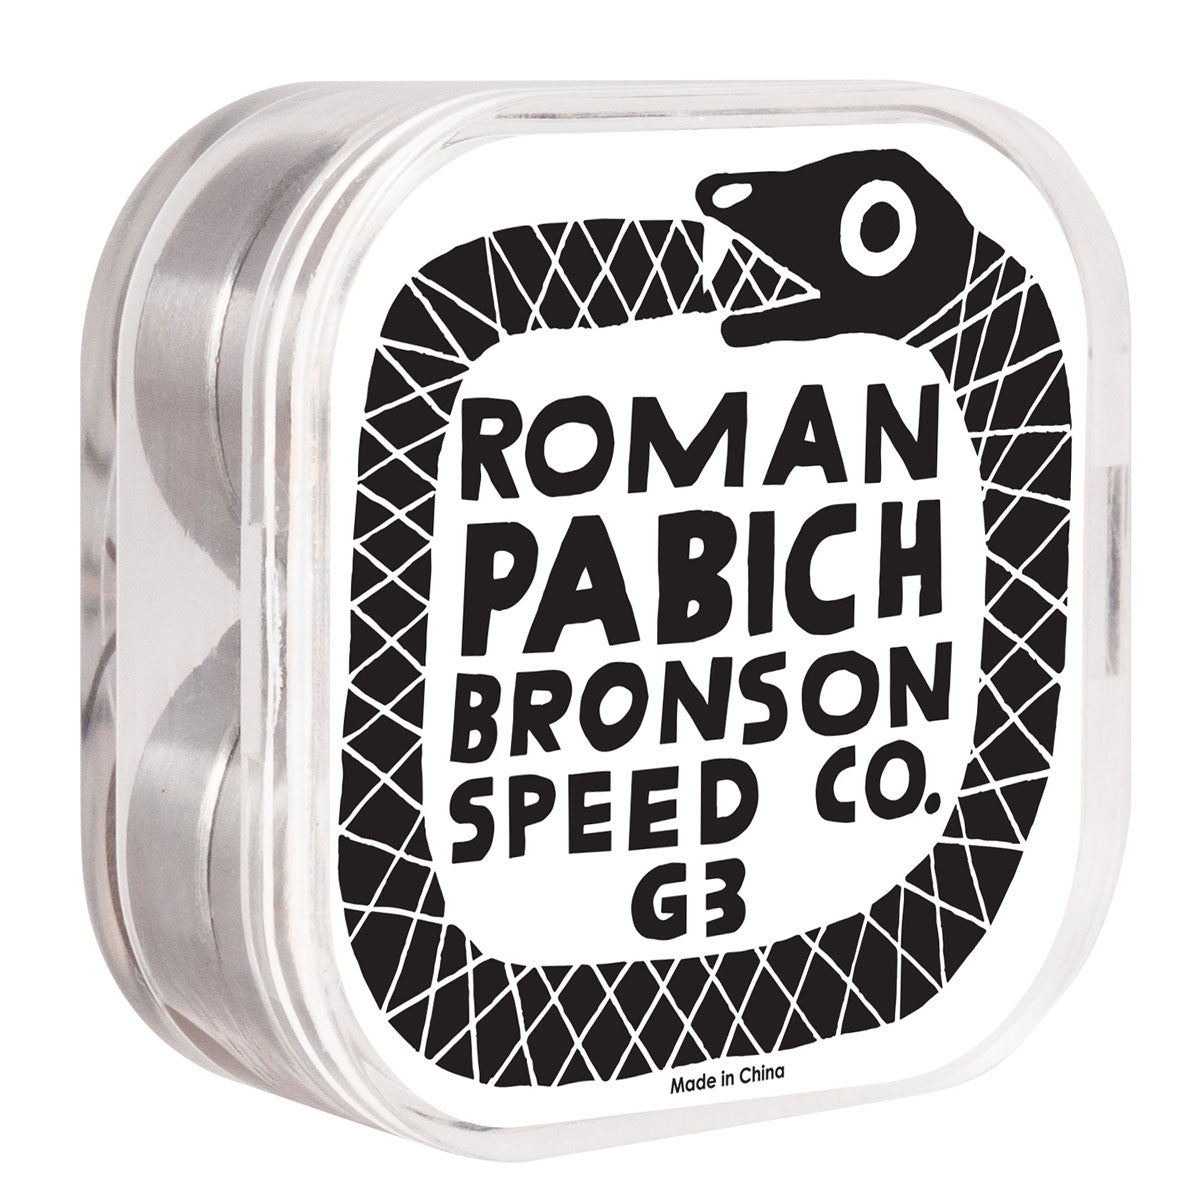 Bronson Roman Pabich Pro G3 Bearings image 1